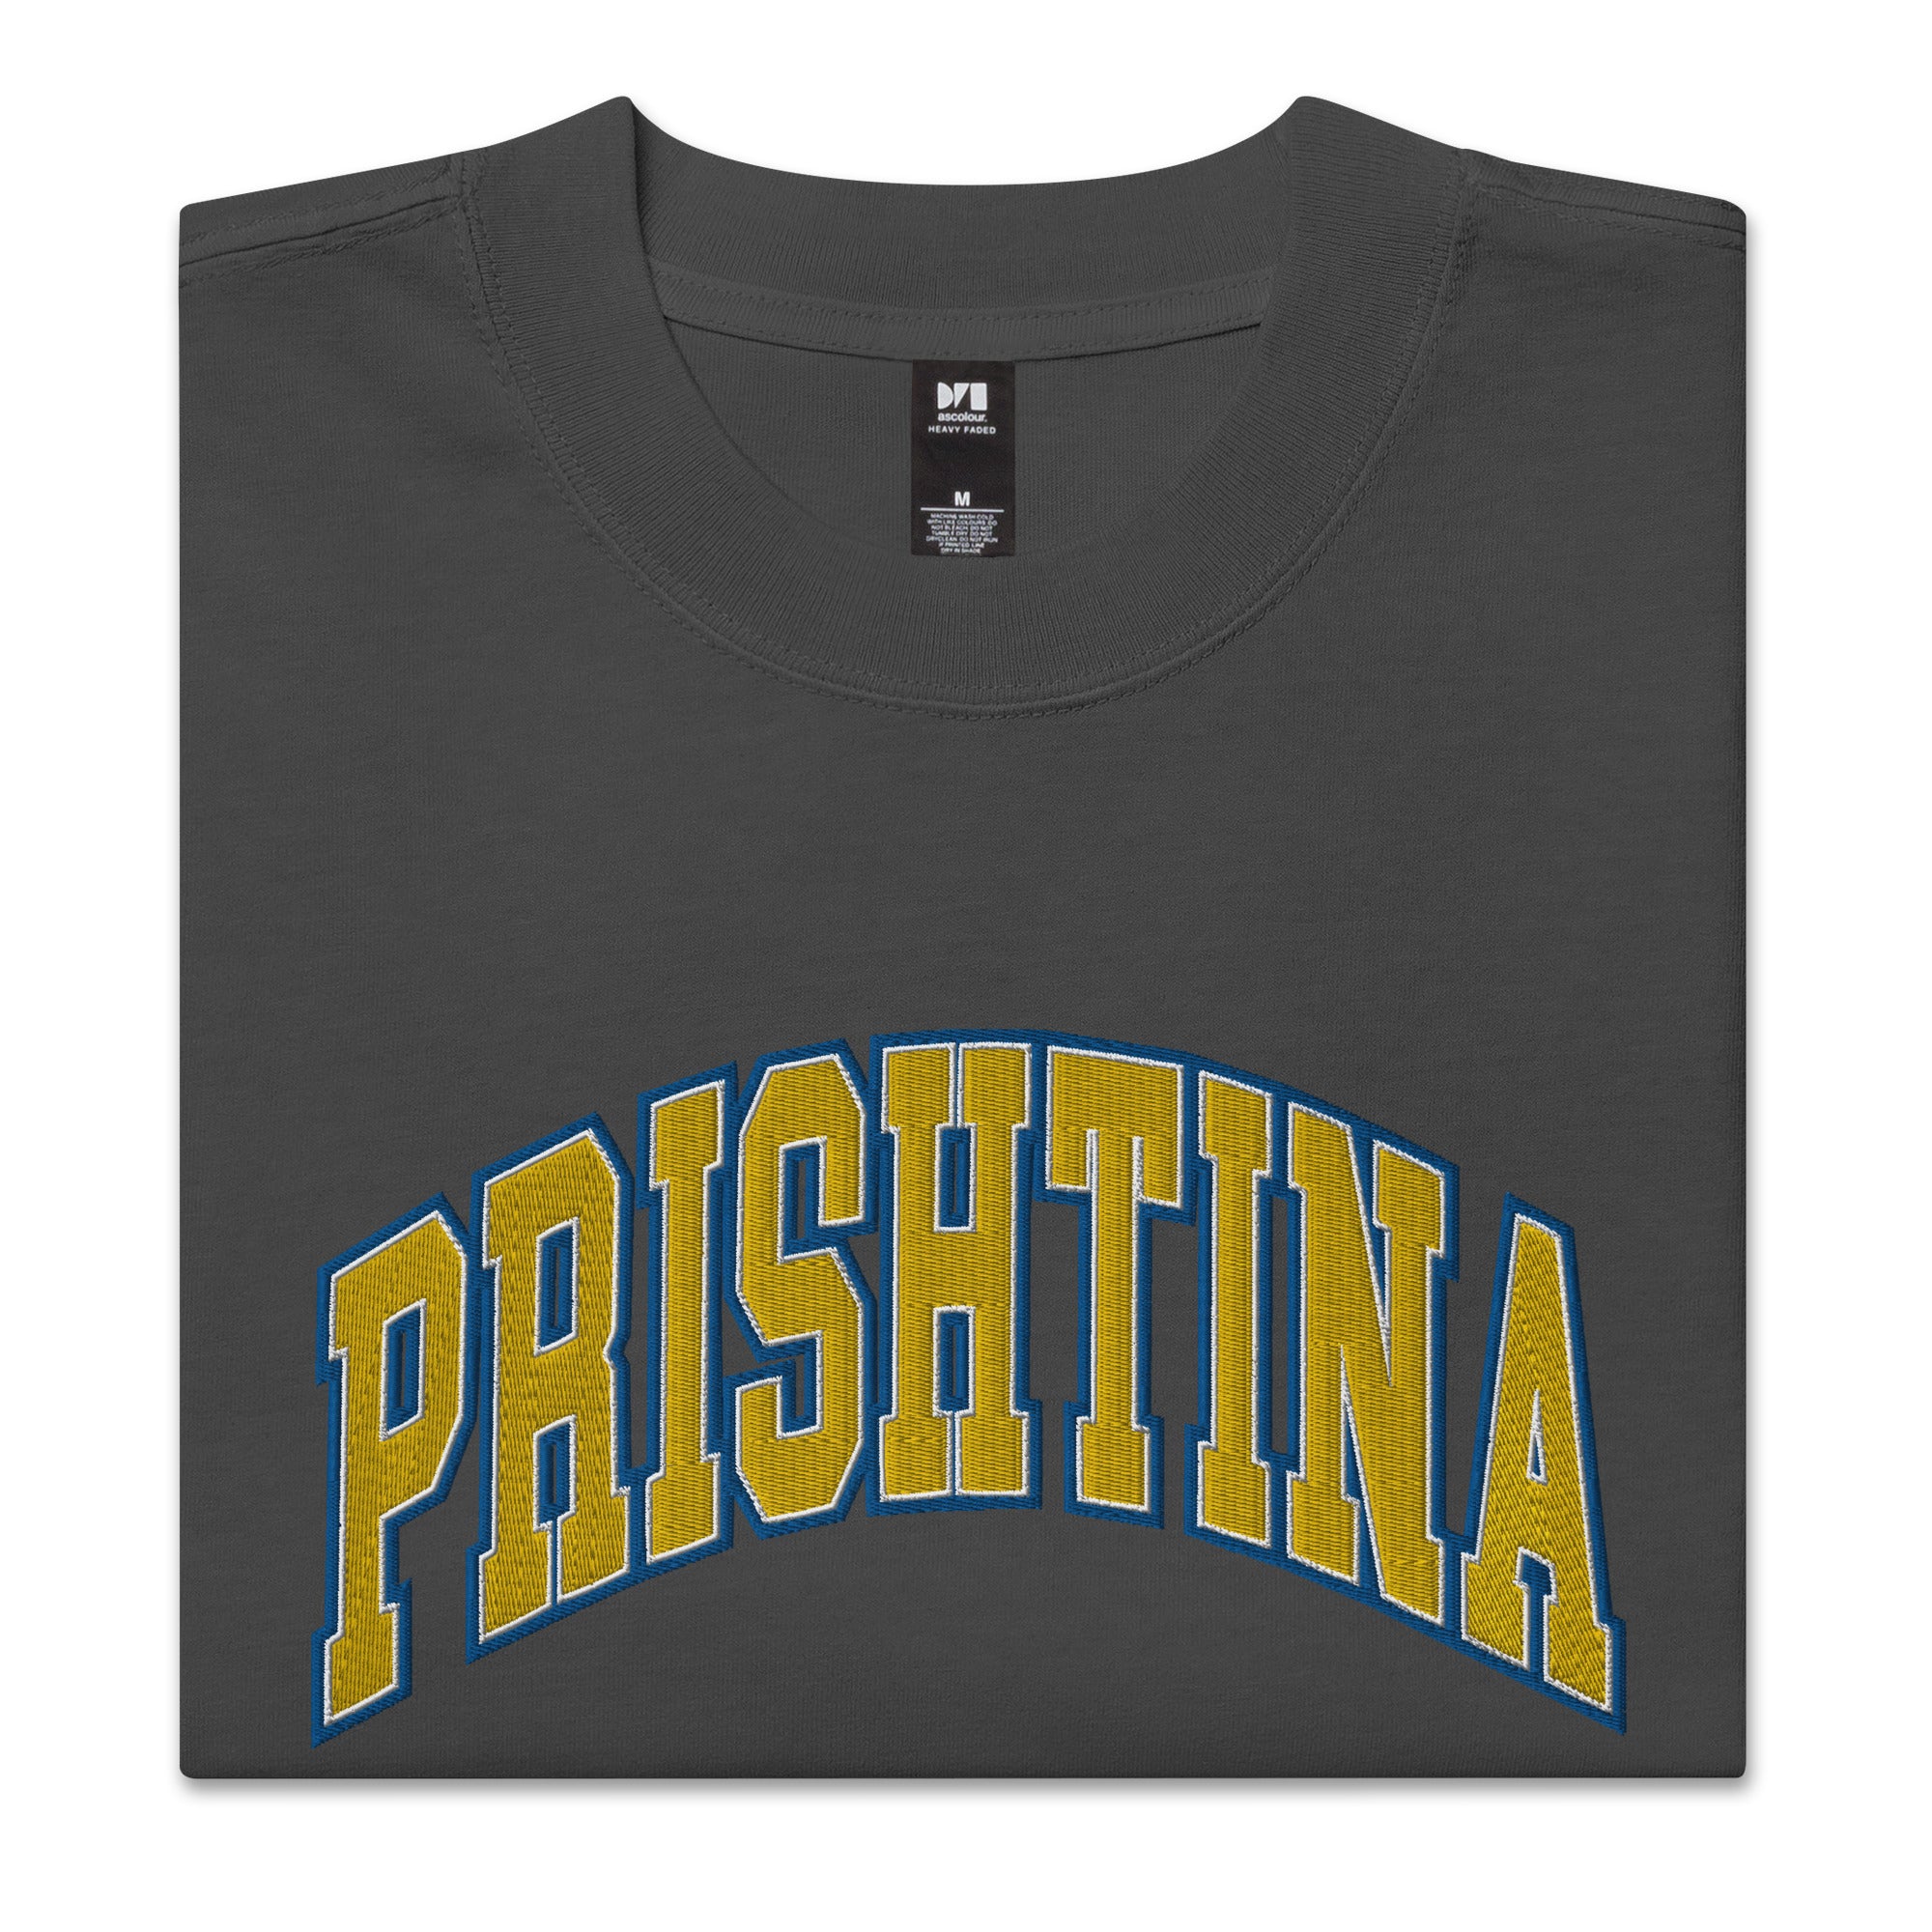 Oversized Prishtina Kosovo faded t-shirt